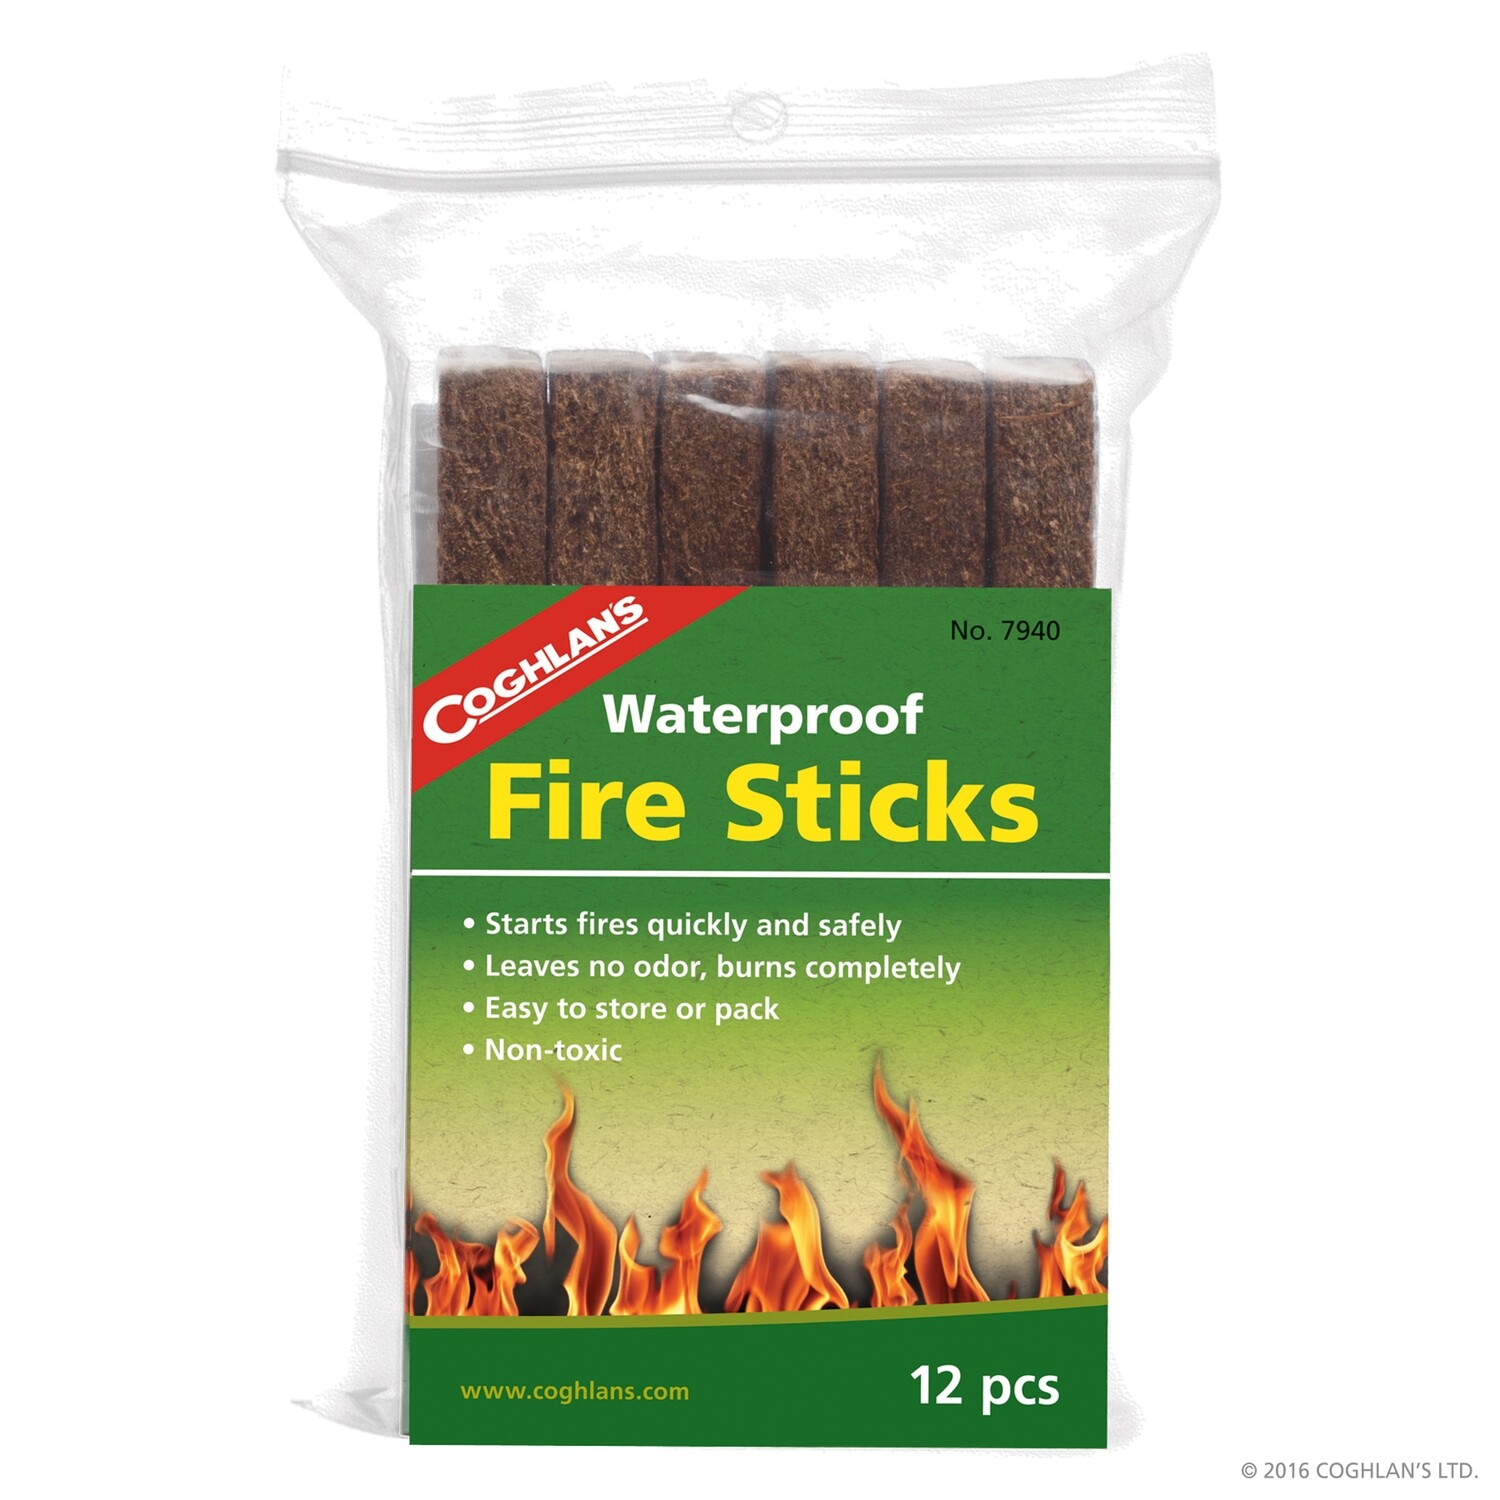 Coghlan's Fire Sticks